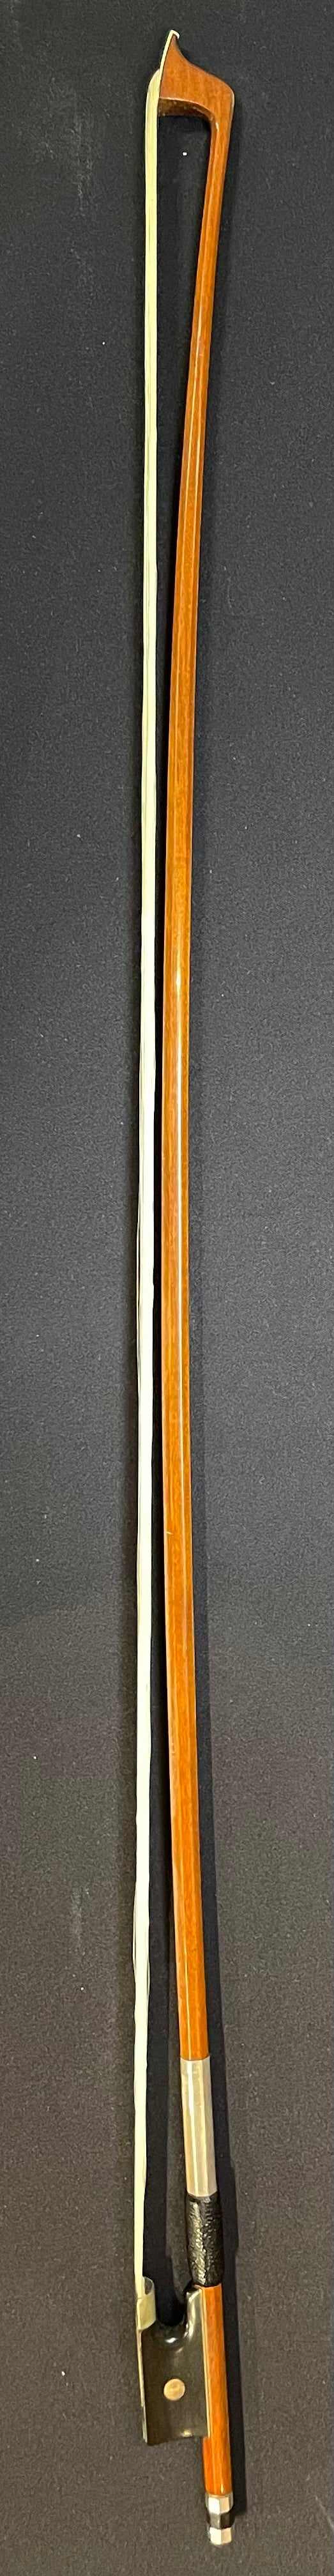 4/4 Violin Bow - AN5 Model